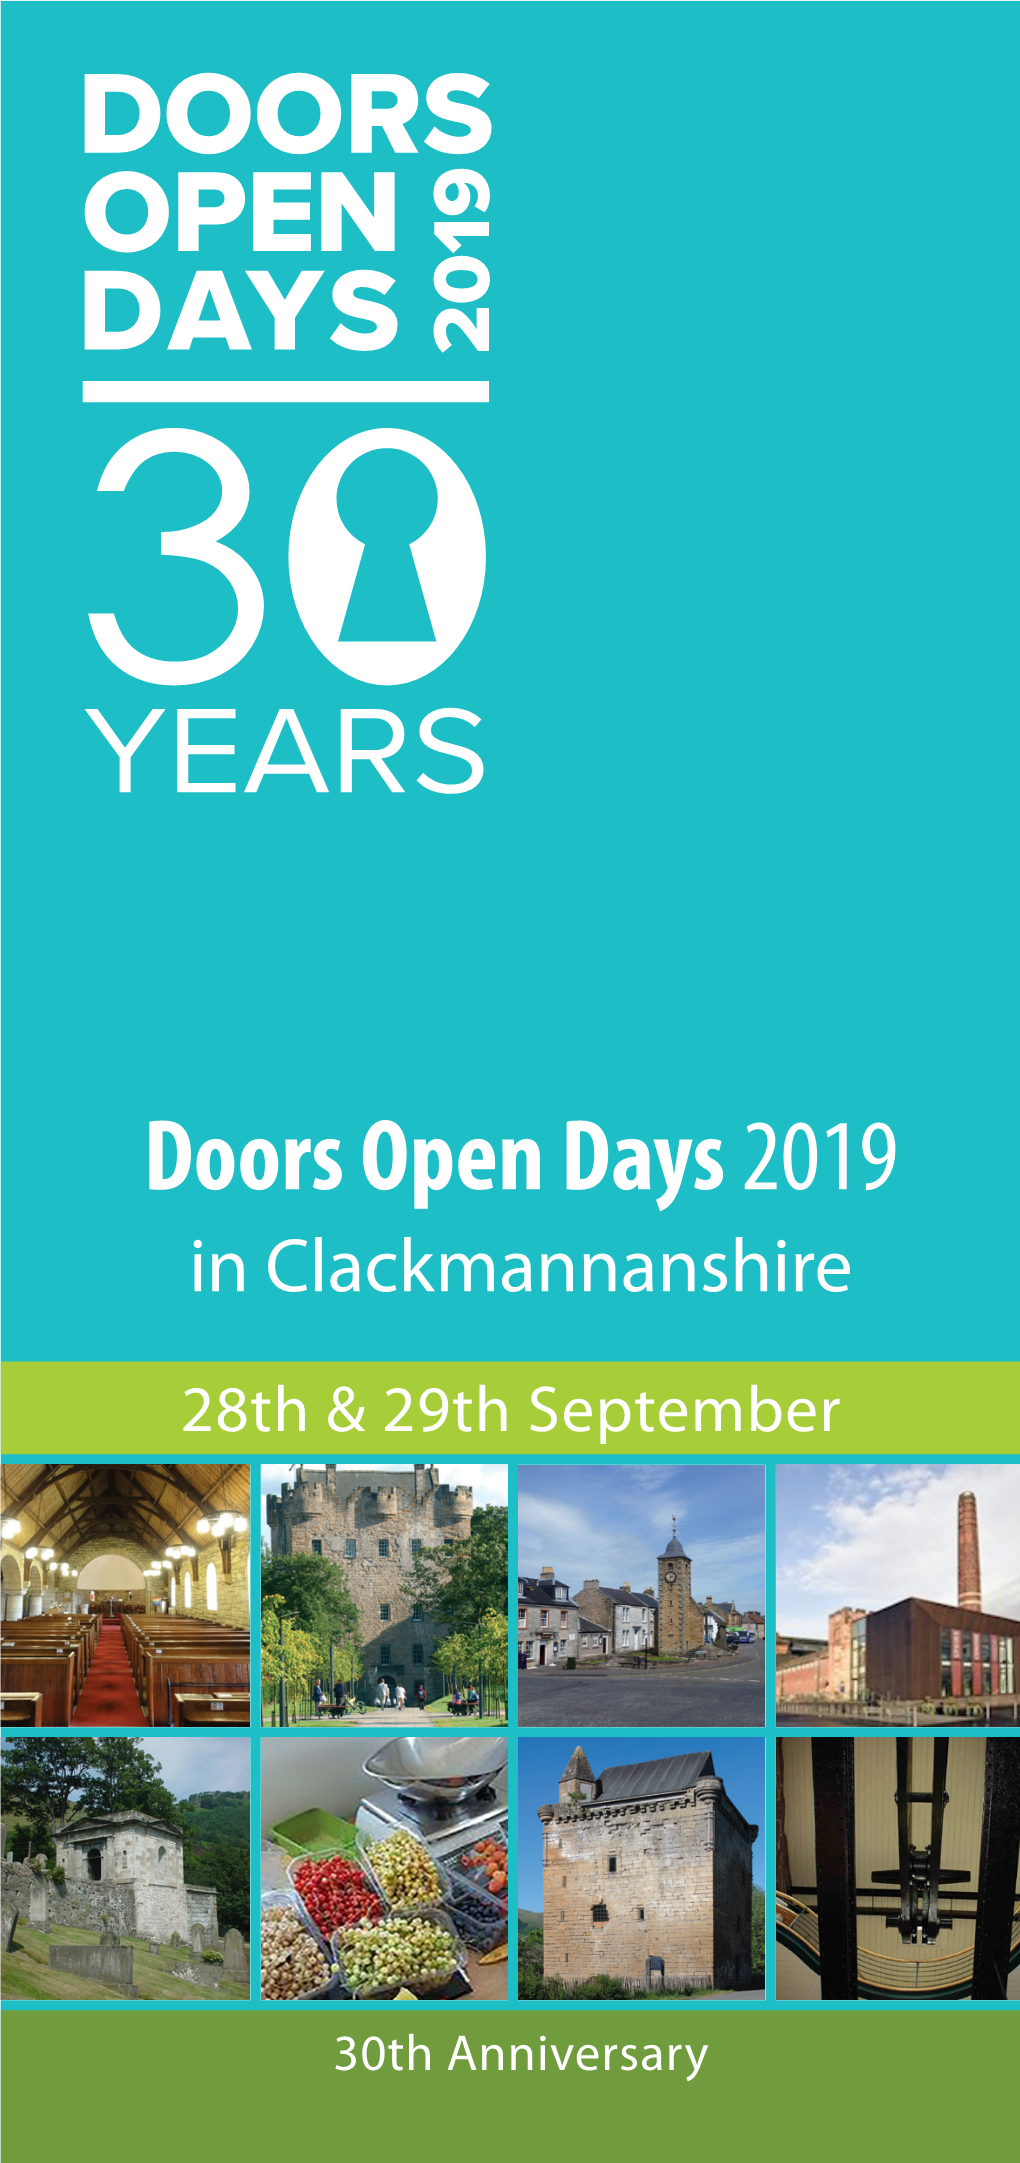 Doors Open Days 2019 in Clackmannanshire